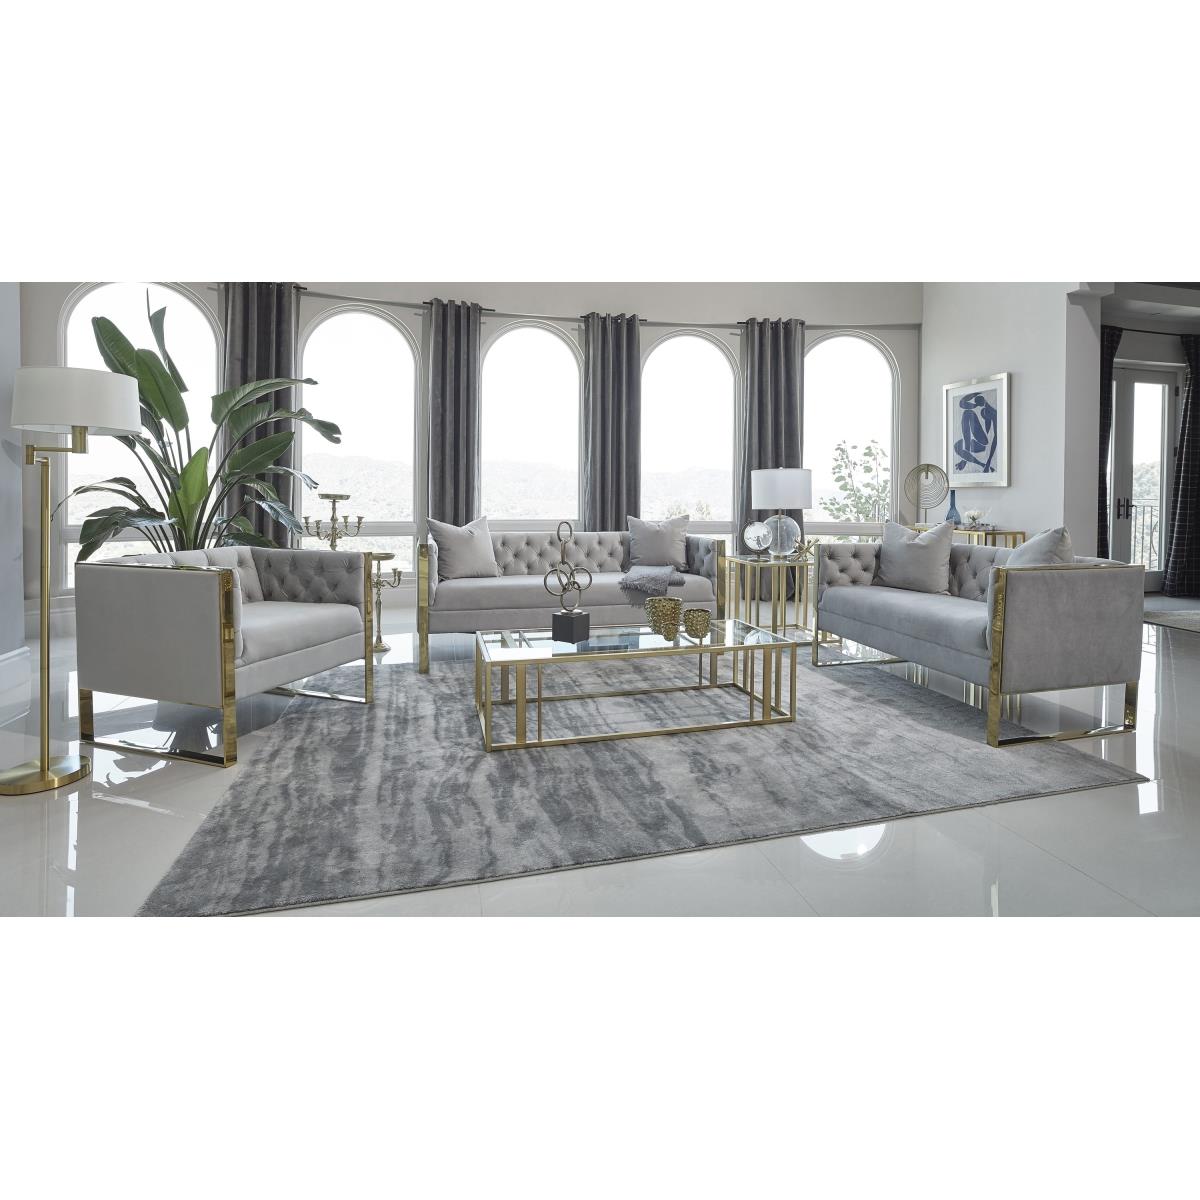 Picture of Coaster Furniture 509111-S2 Sofa Plus Loveseat Living Room Set - 2 Piece